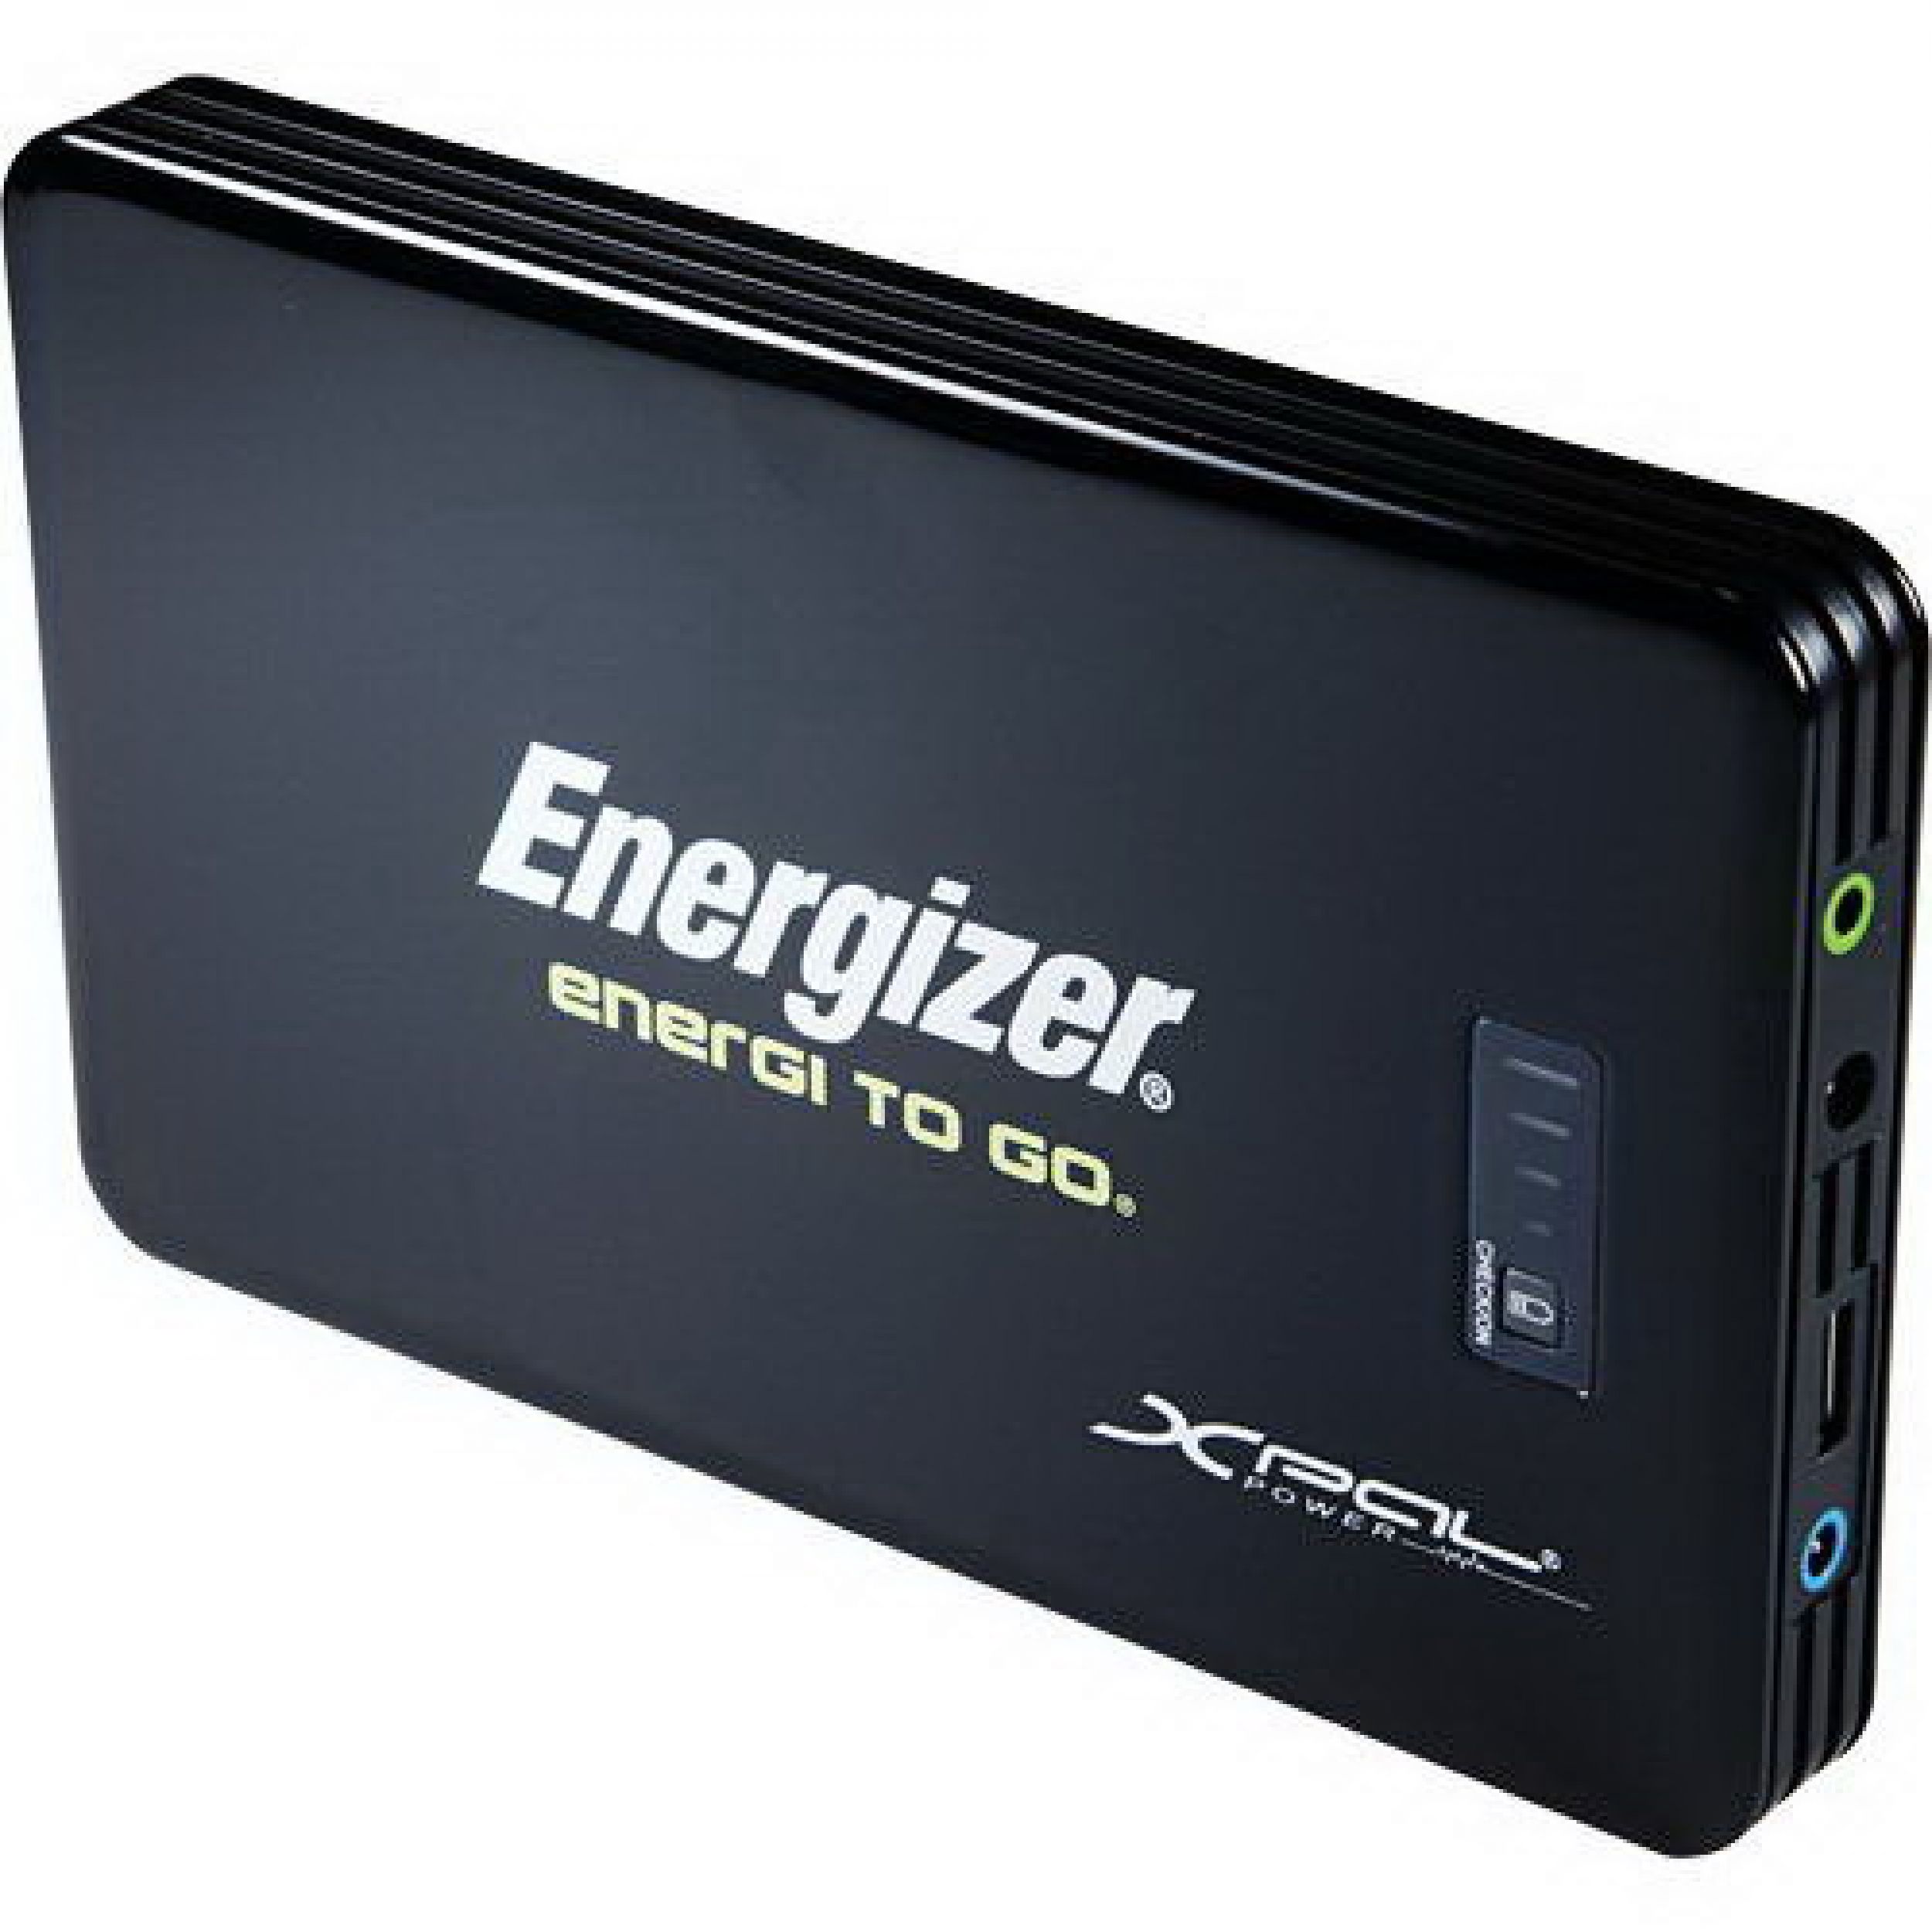 Energizer_XP18000.jpg